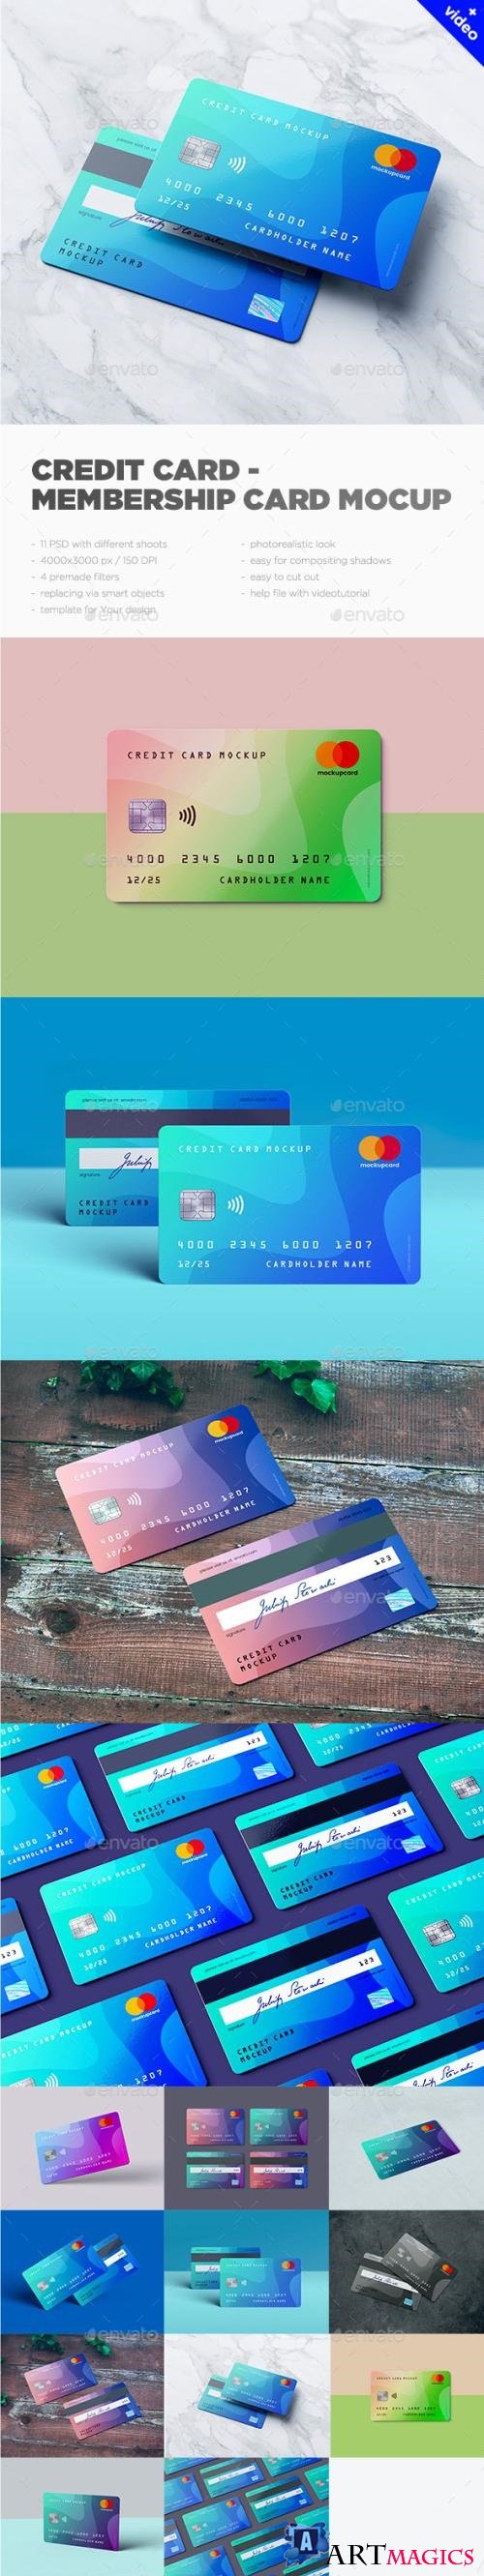 Credit Card / Membership Card MockUp - 22369086